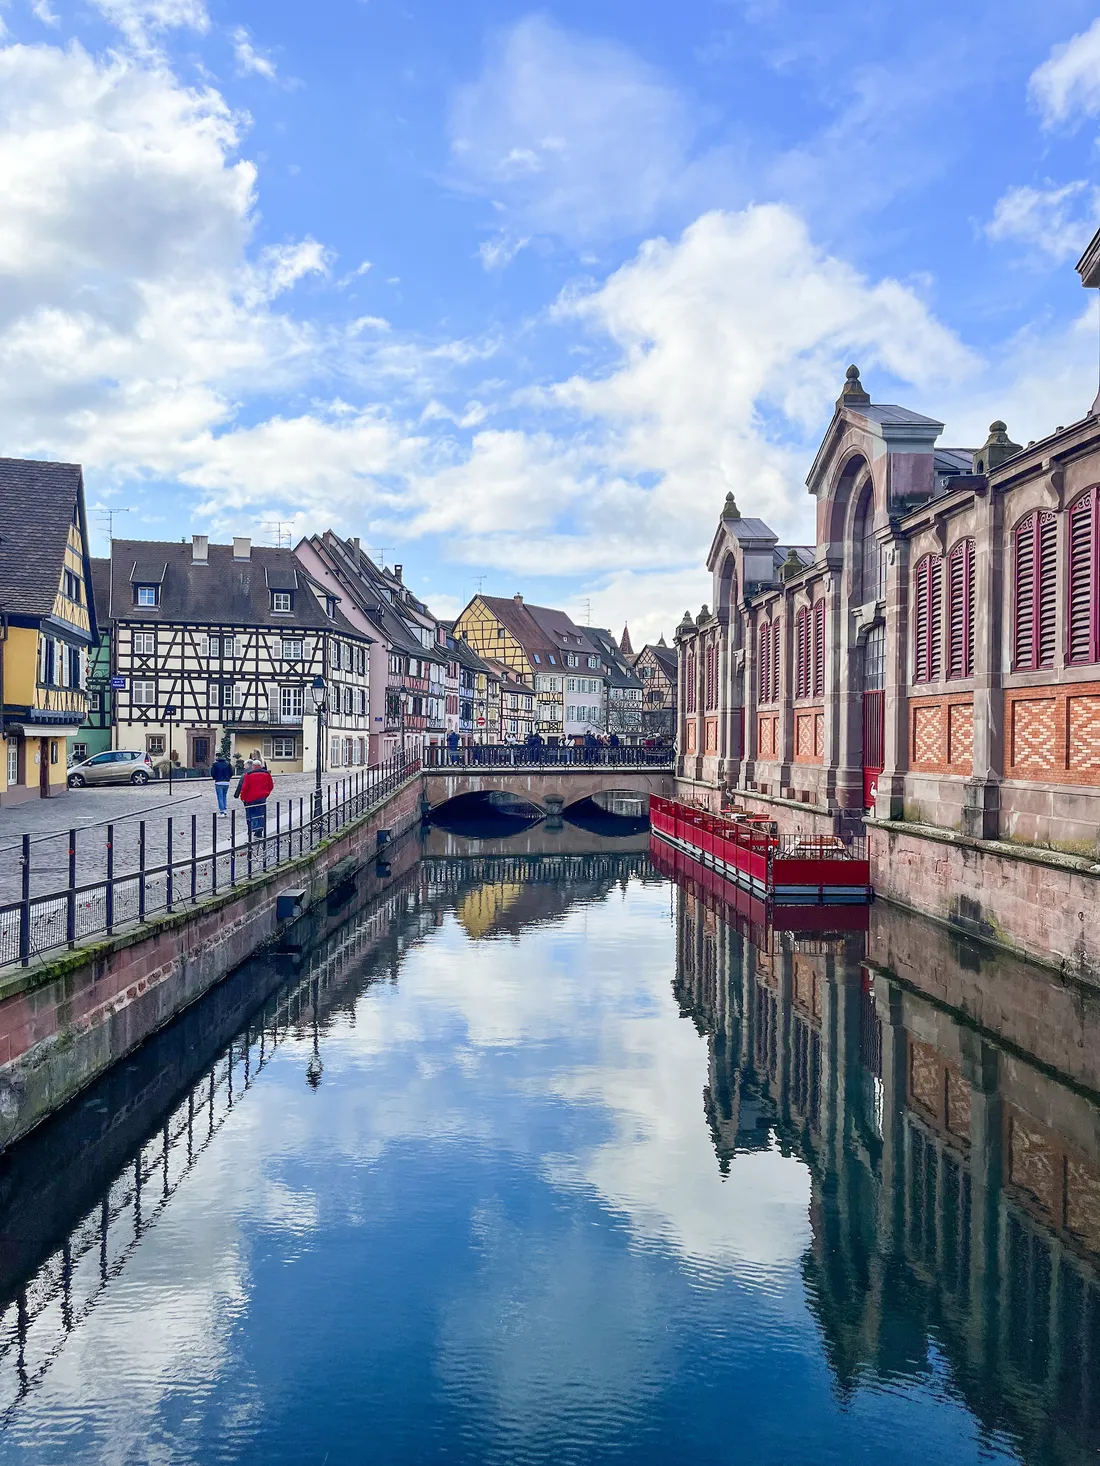 Waterway in Strasbourg, France.